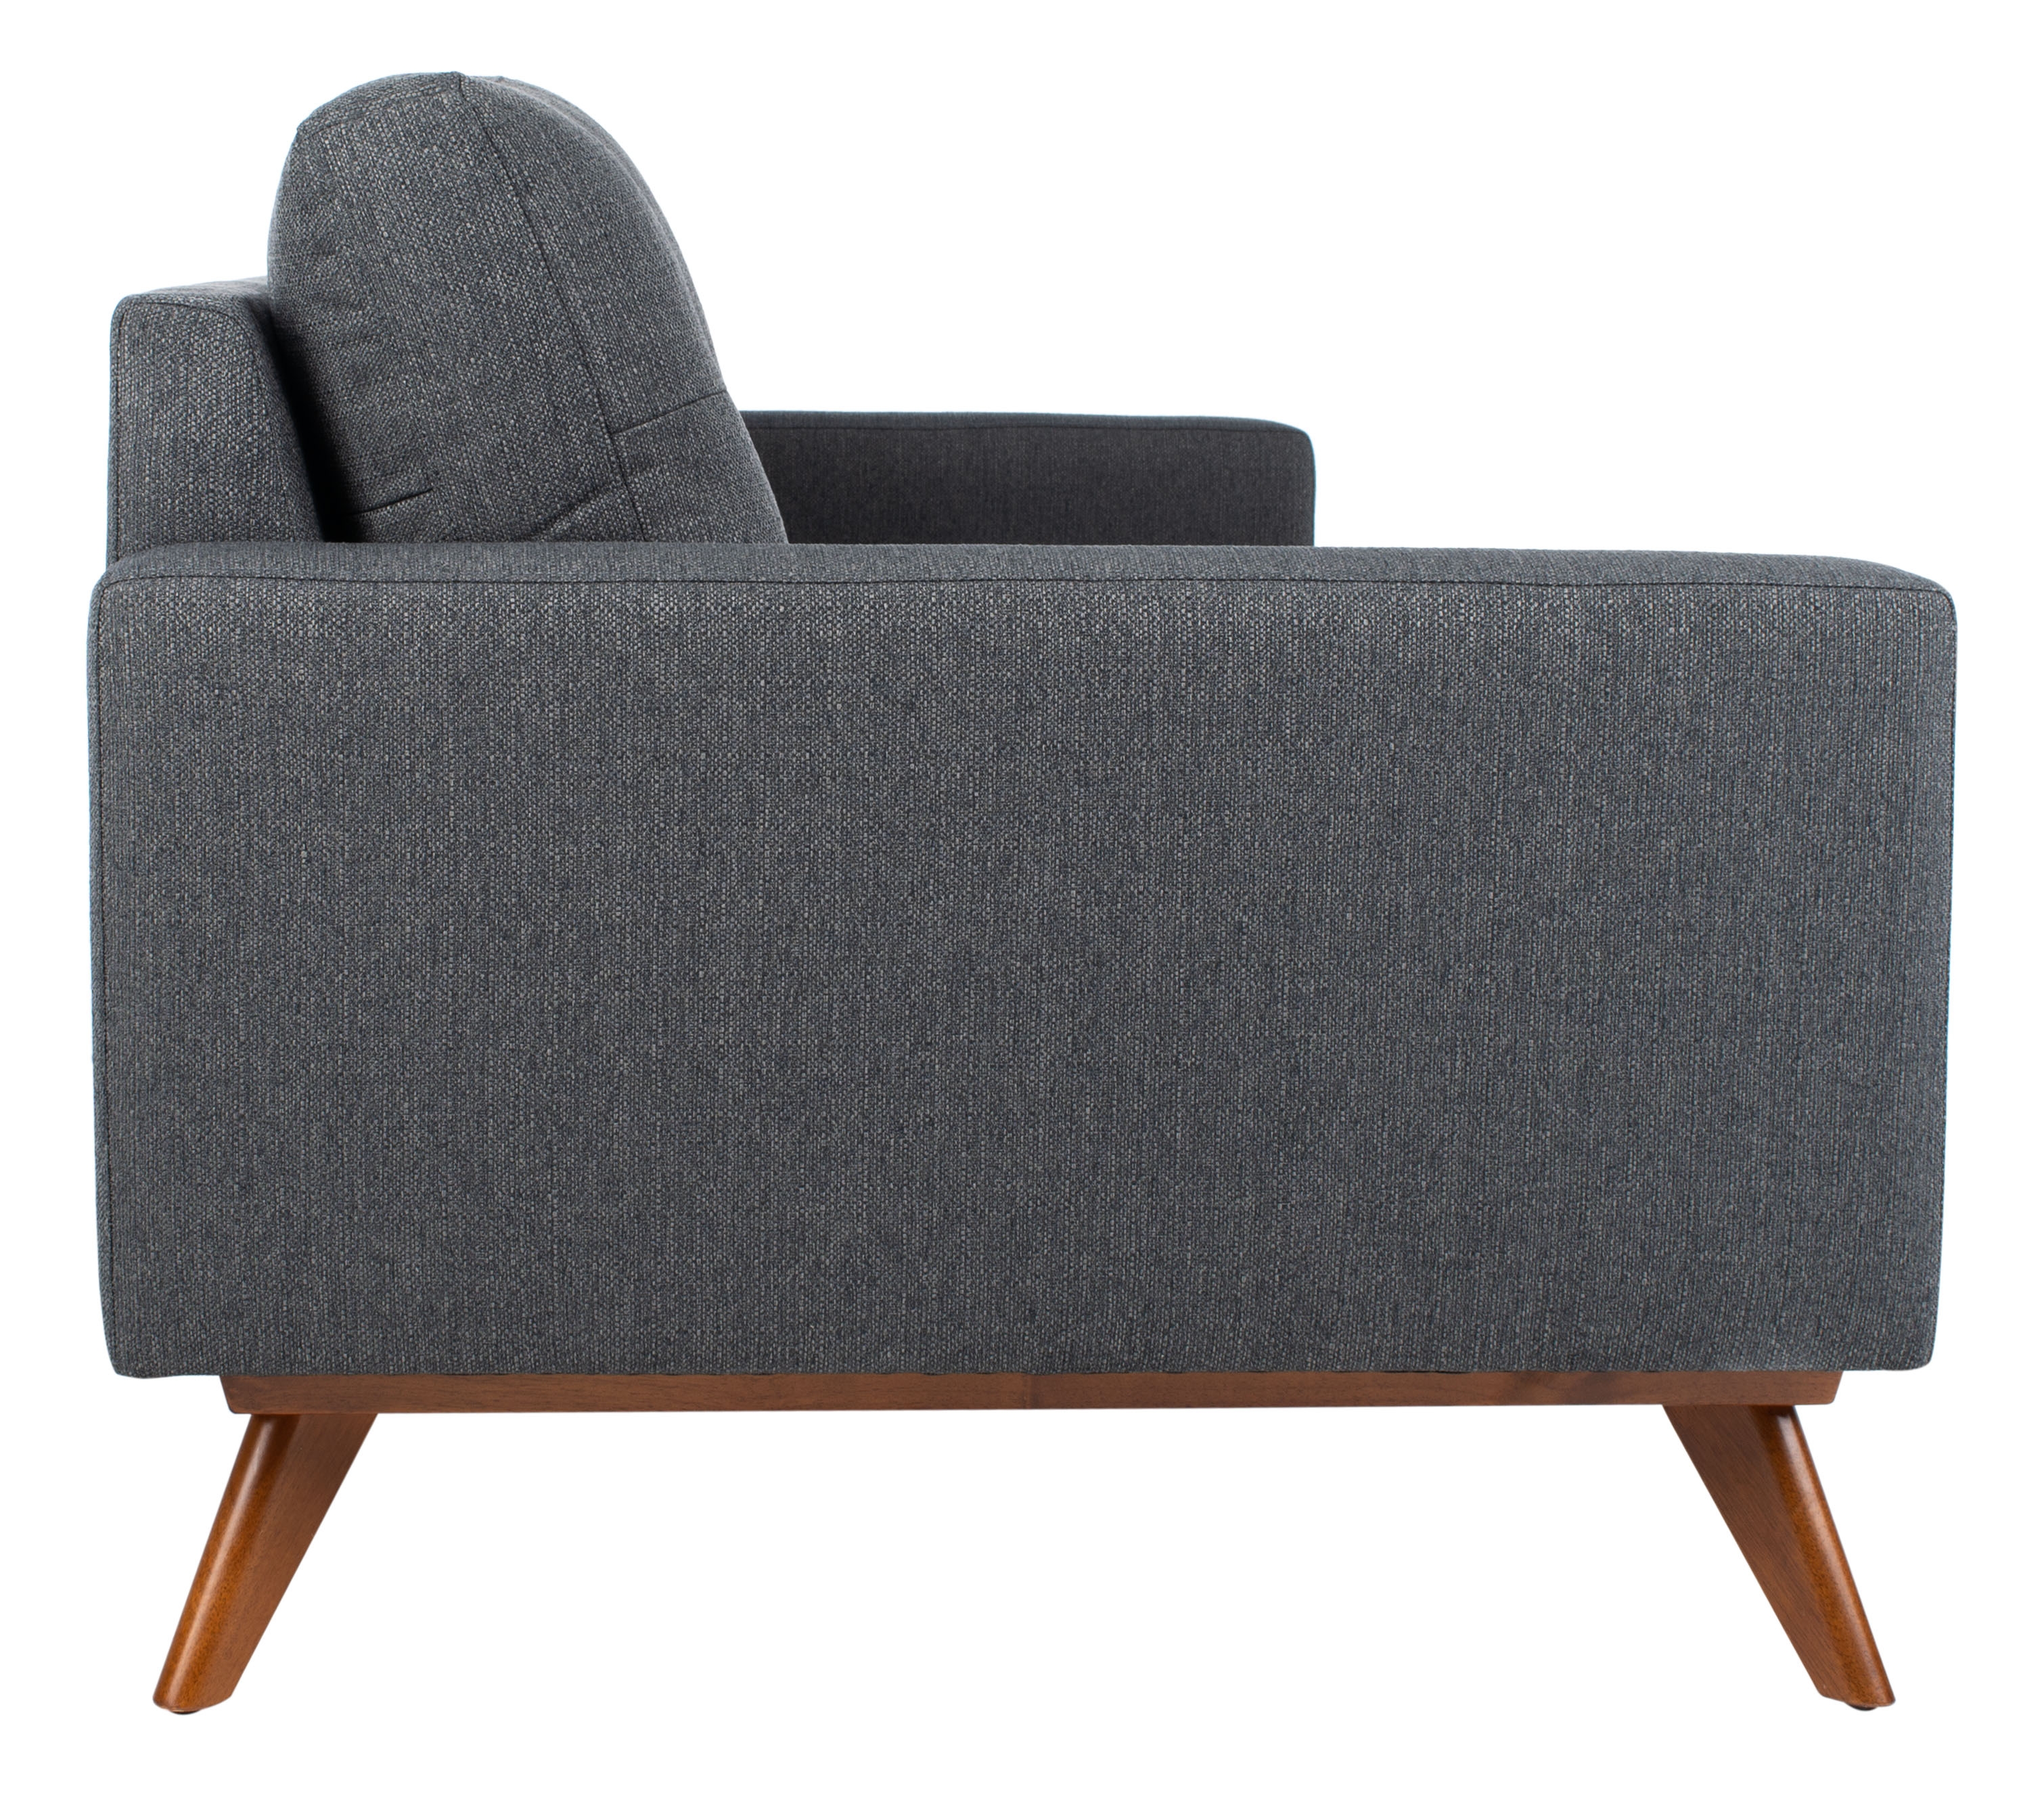 Gneiss Modern Linen Sofa - Slate Grey - Arlo Home - Image 1